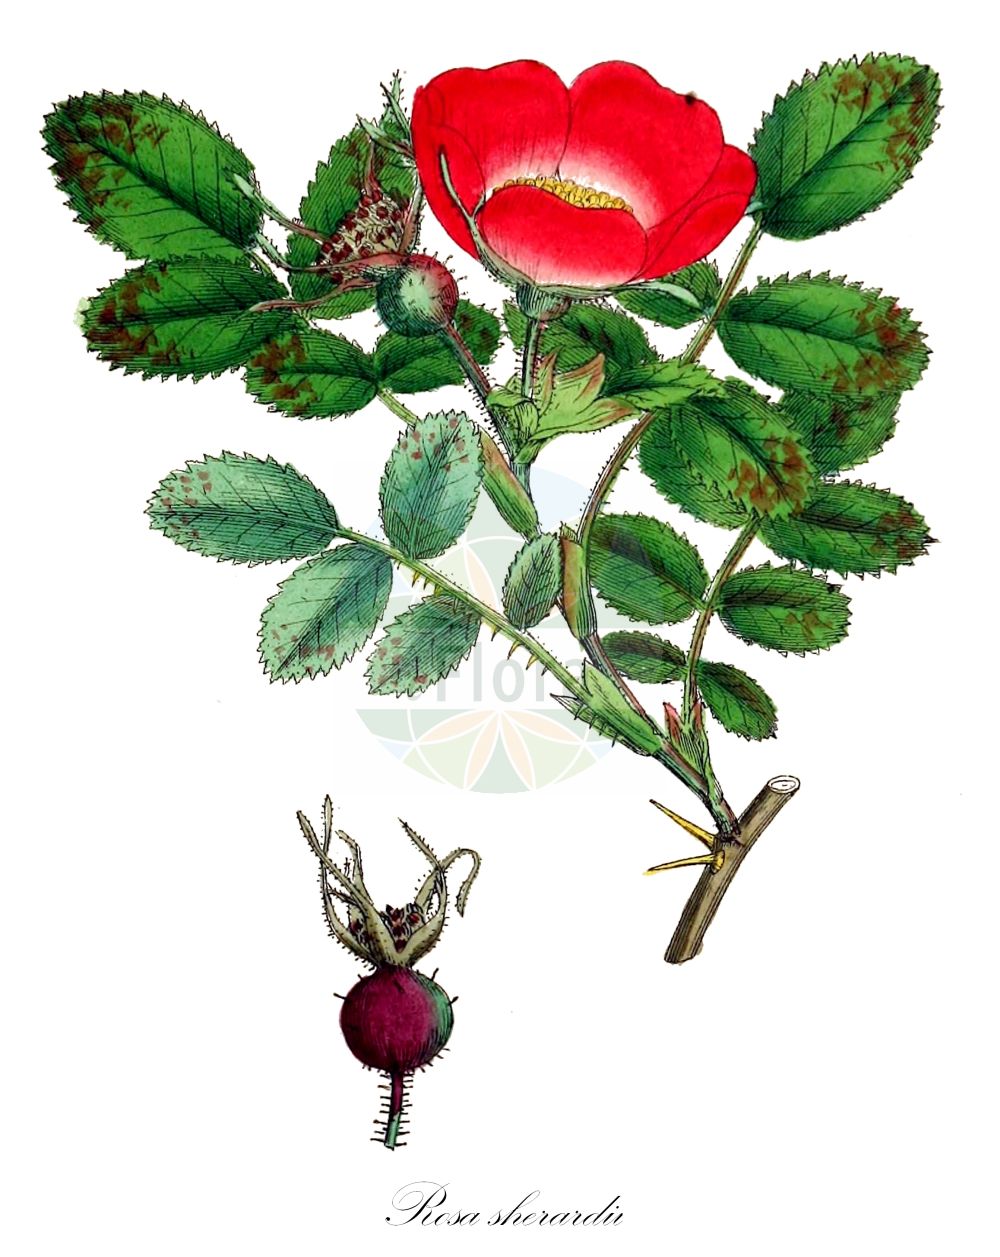 Historische Abbildung von Rosa sherardii (Samt-Rose - Sherard's Downy-rose). Das Bild zeigt Blatt, Bluete, Frucht und Same. ---- Historical Drawing of Rosa sherardii (Samt-Rose - Sherard's Downy-rose). The image is showing leaf, flower, fruit and seed.(Rosa sherardii,Samt-Rose,Sherard's Downy-rose,Rosa aculeatior,Rosa collivaga,Rosa cuspidatoides,Rosa gillotii,Rosa littoralis,Rosa omissa,Rosa oskolensis,Rosa praecox,Rosa resinosoides,Rosa seringeana,Rosa sherardii,Rosa strengnensis,Rosa subglobosa,Rosa submollis,Rosa tunoniensis,Rosa umbelliflora,Rosa uncinata,Rosa venusta,Rosa villosa subsp. sherardii,Samt-Rose,Sammet-Rose,Sherards Rose,Sherard's Downy-rose,Rosa,Rose,Rose,Rosaceae,Rosengewächse,Rose family,Blatt,Bluete,Frucht,Same,leaf,flower,fruit,seed,Sowerby (1790-1813))